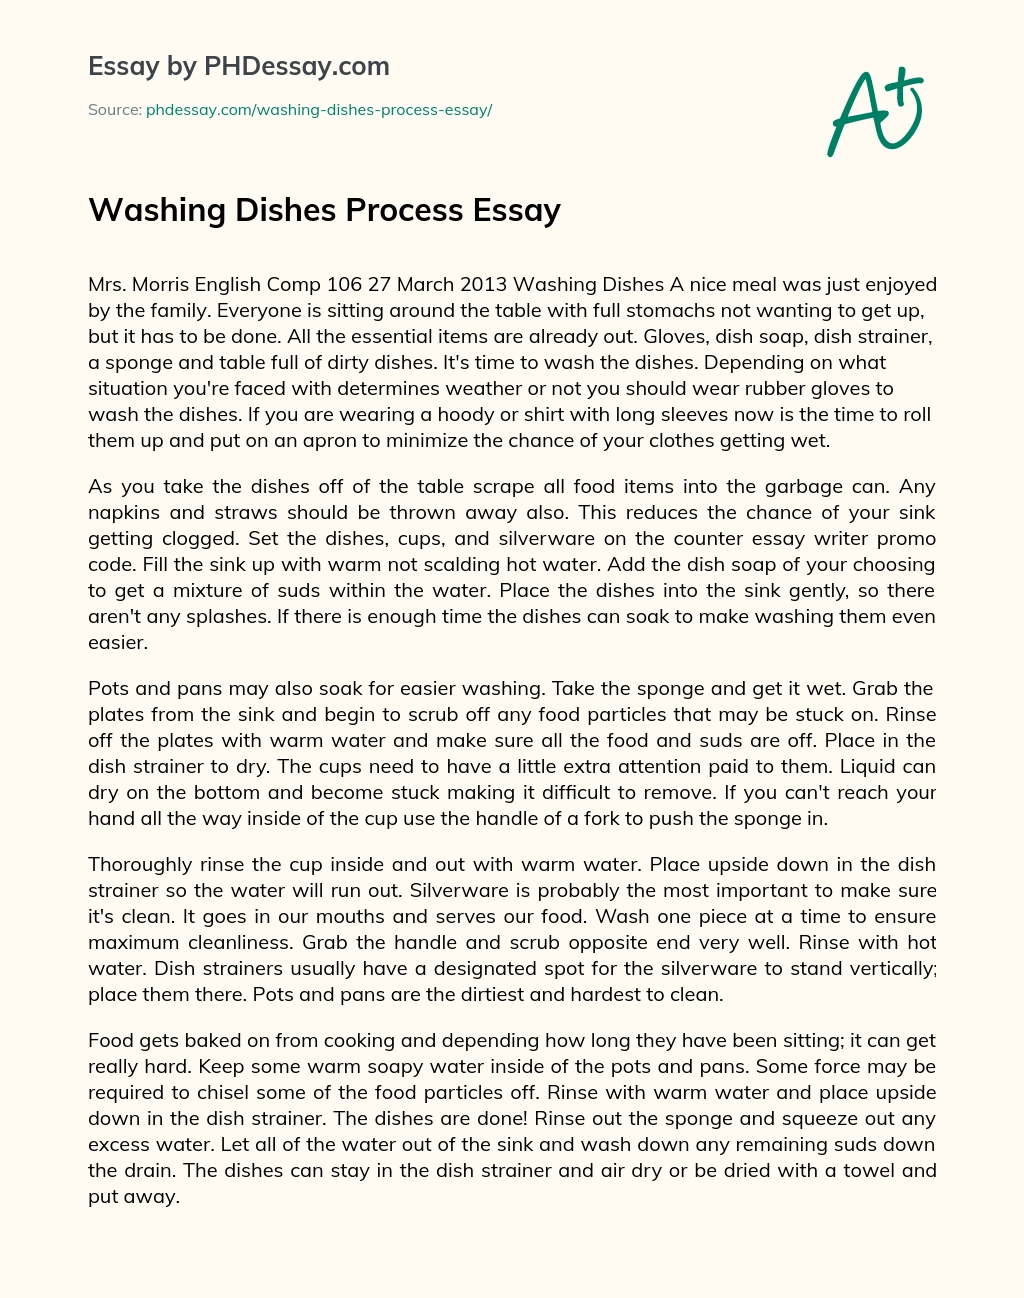 Washing Dishes Process Essay essay